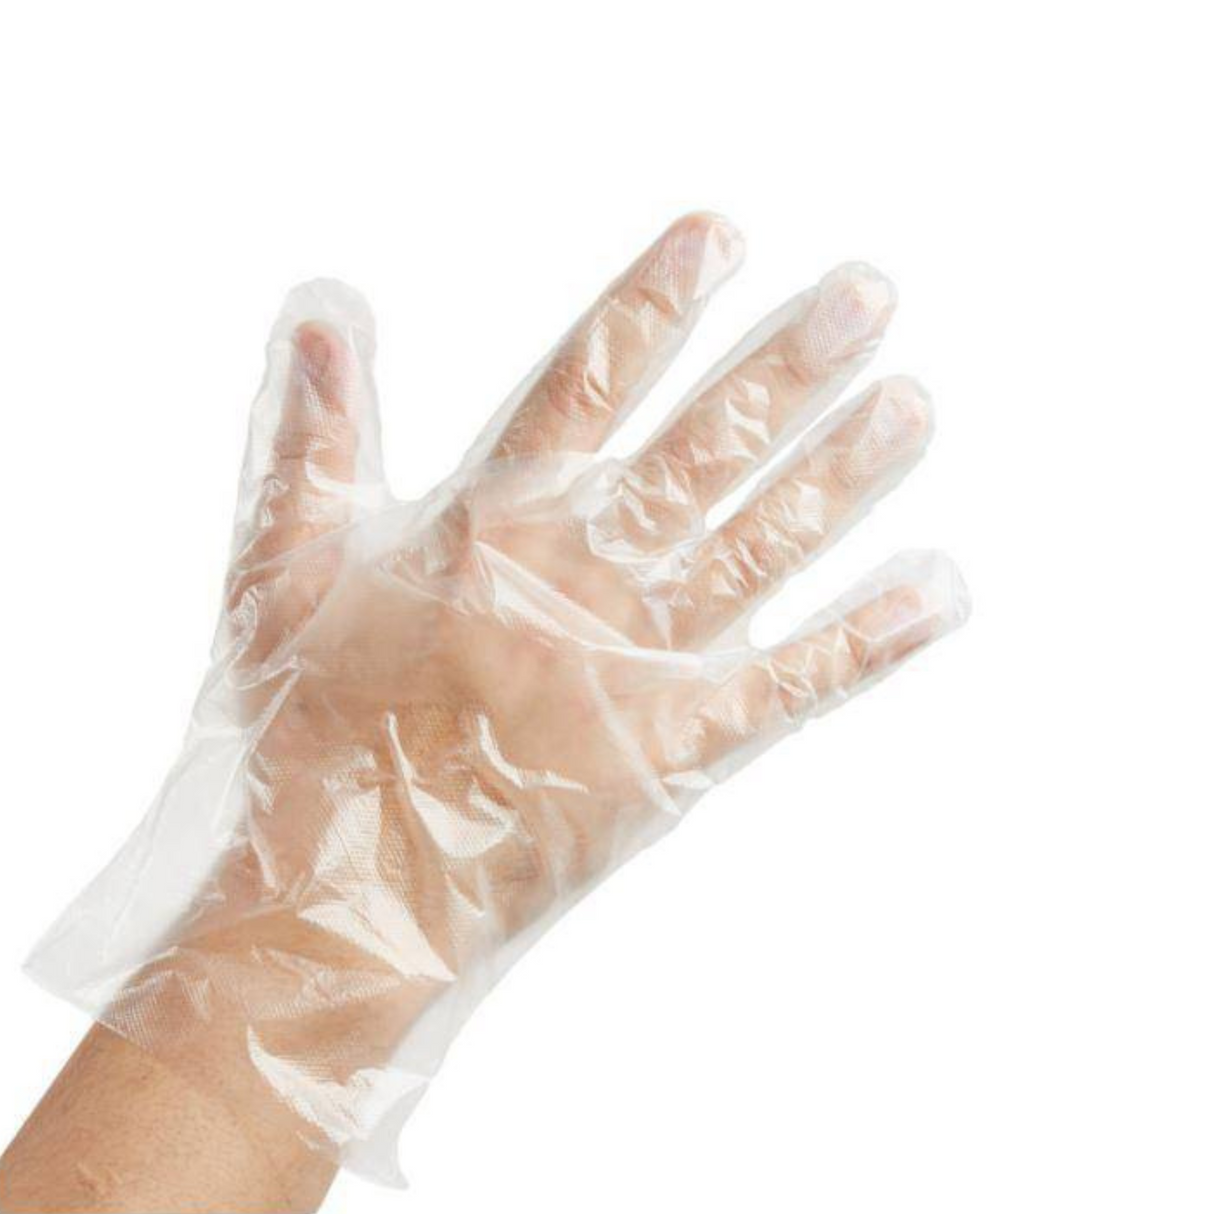 EverStrong - Transparent Gloves